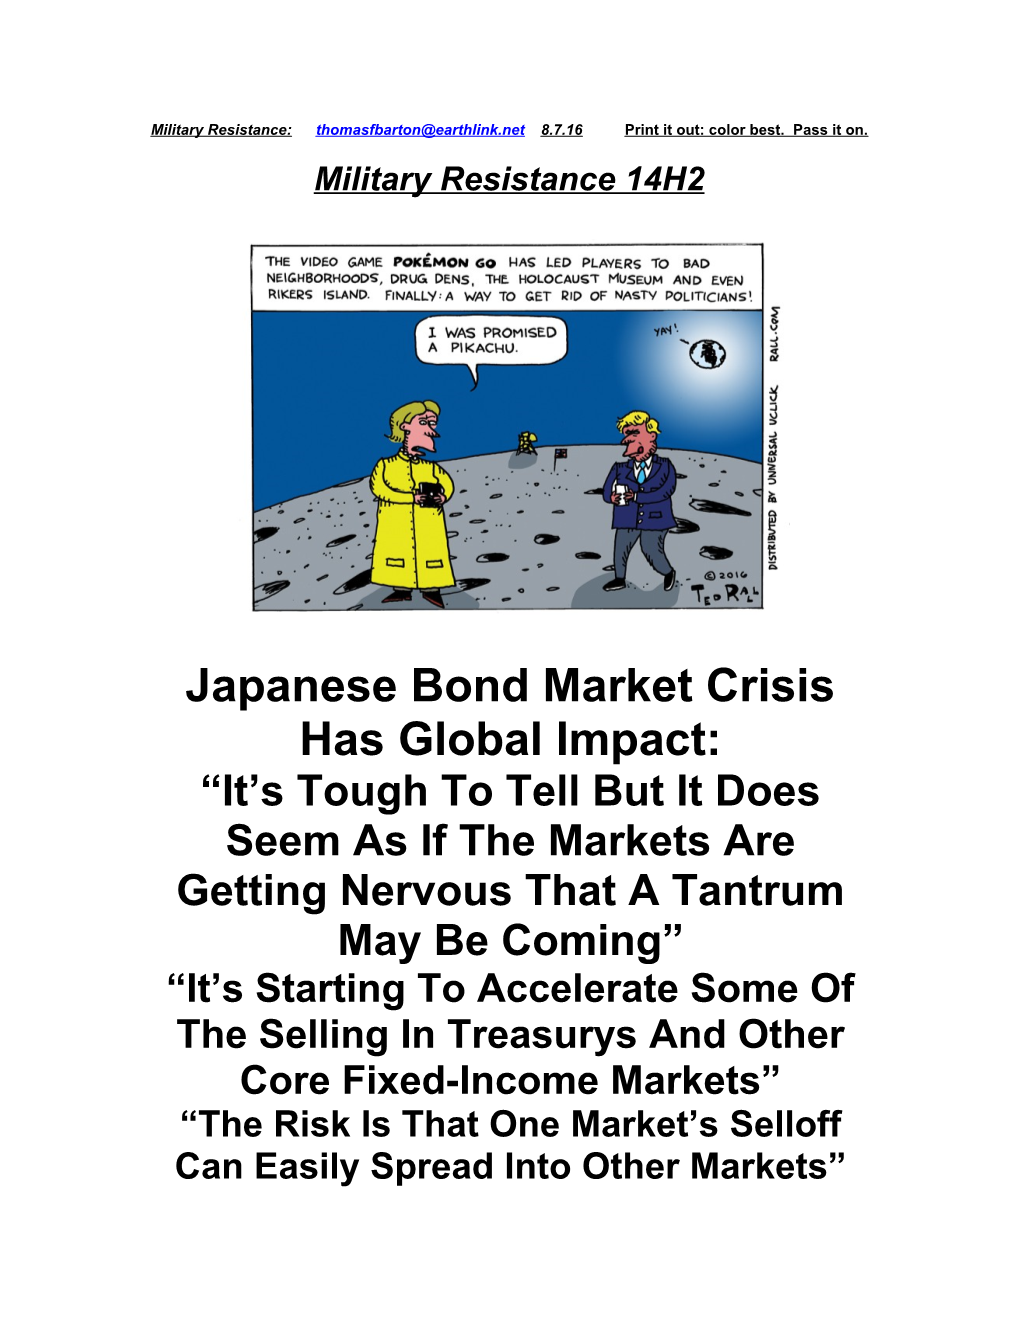 Japanese Bond Market Crisis Has Global Impact